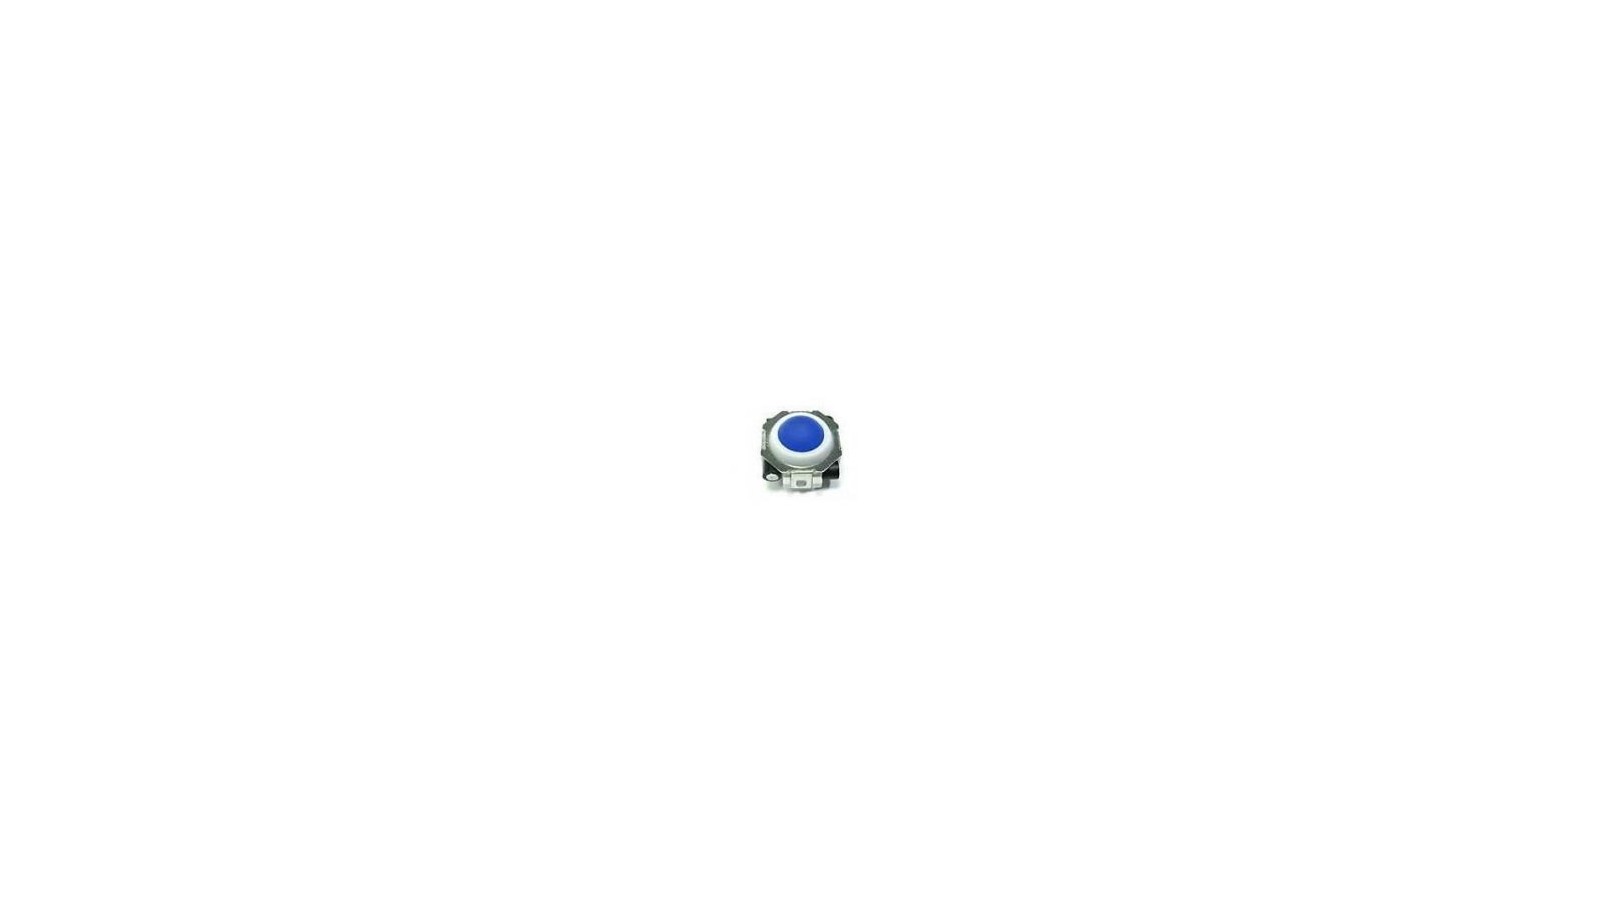 Trackball Joystick blue Blackberry 8900 Curve 9630 Tour